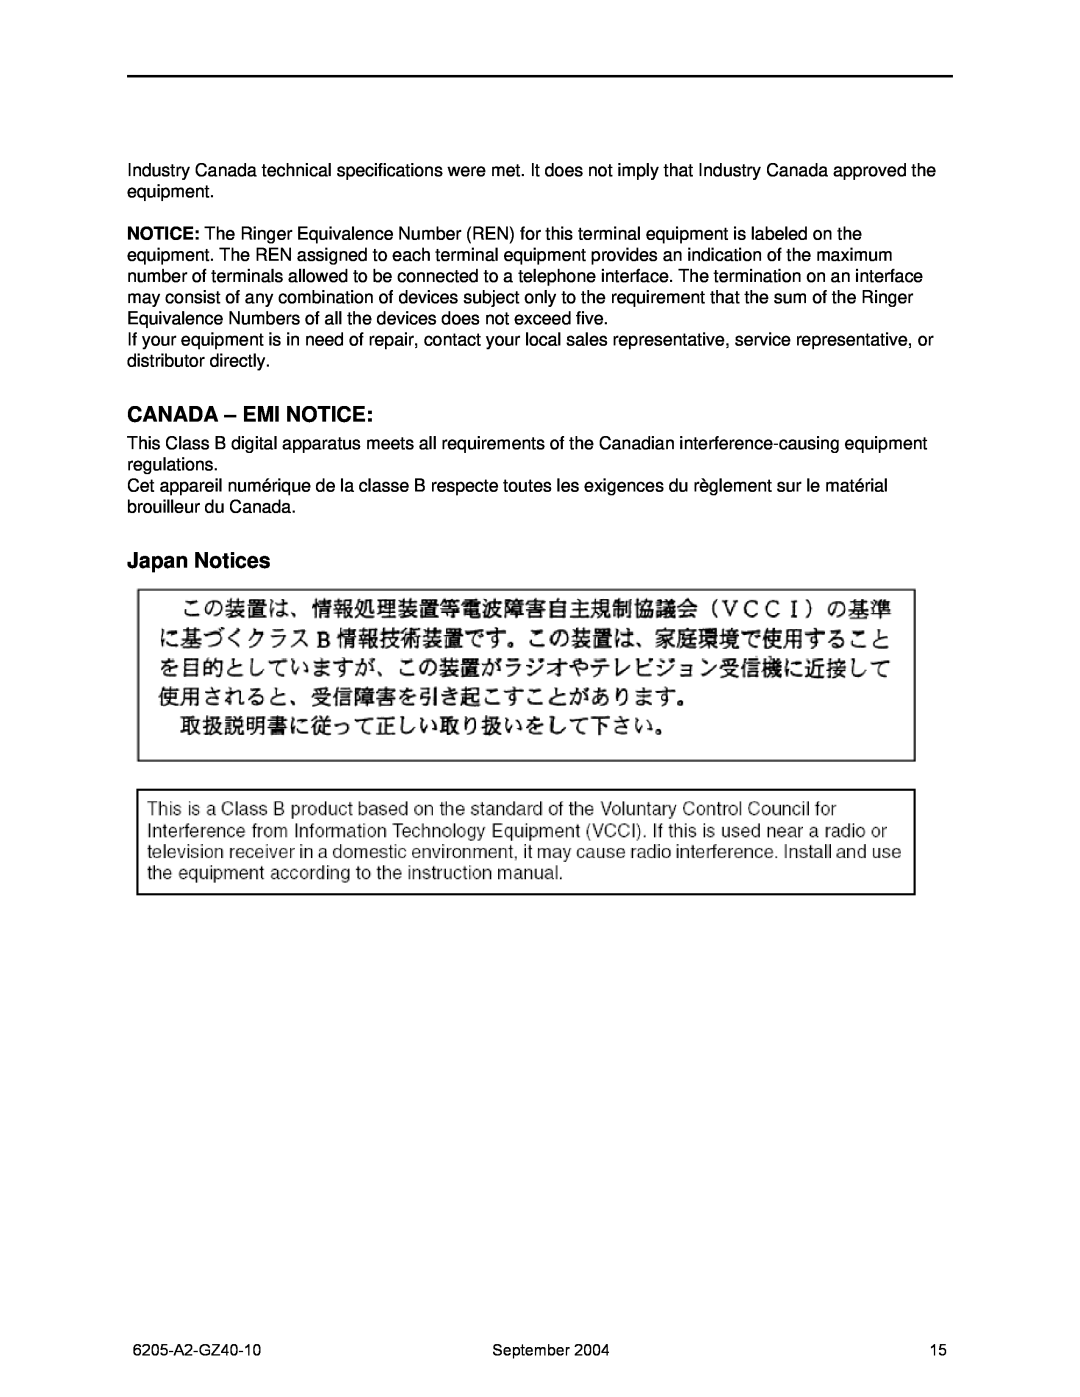 Paradyne 6205 installation instructions Canada - Emi Notice, Japan Notices 